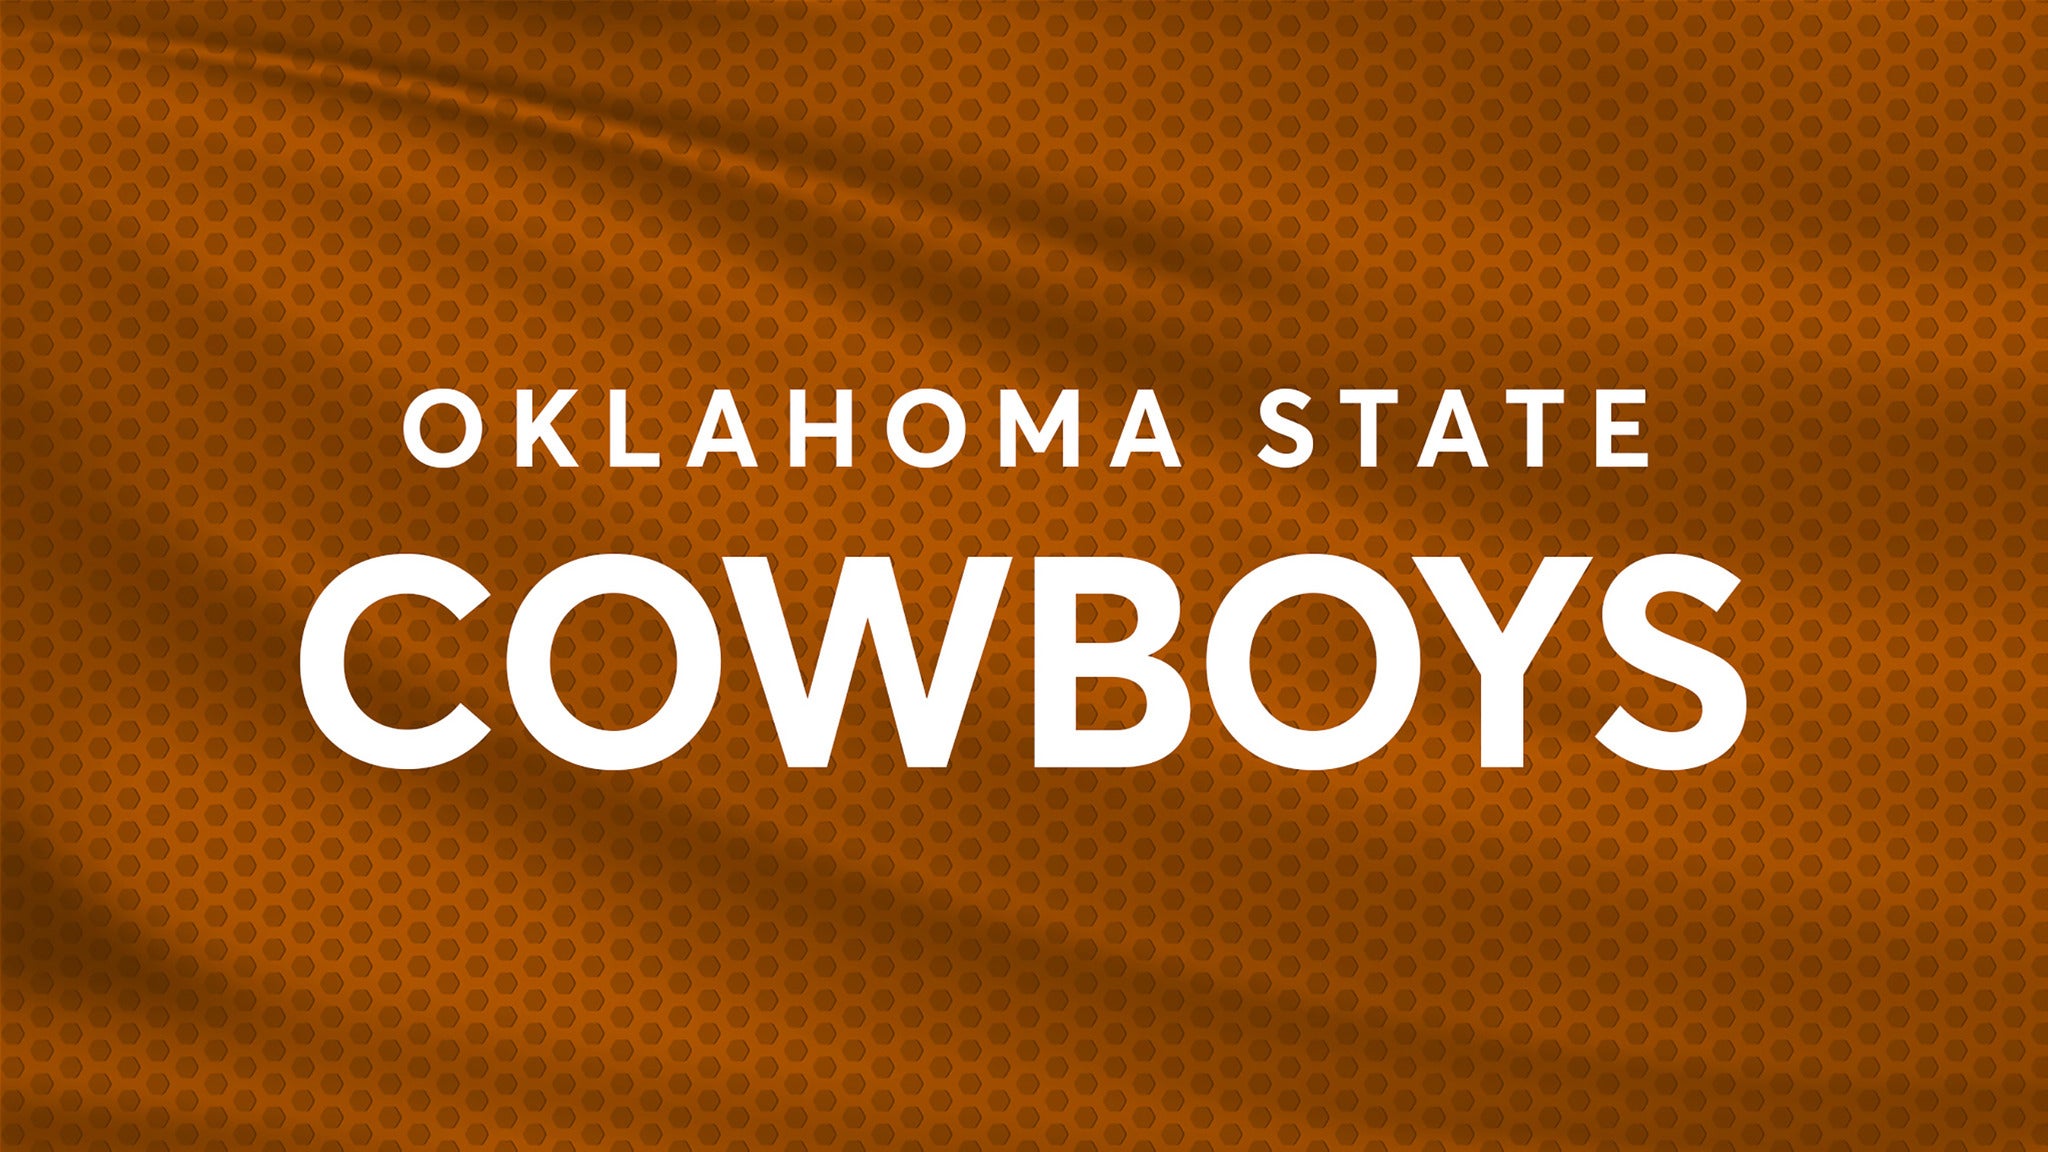 Oklahoma State Cowboys Football vs. Texas Longhorns Football